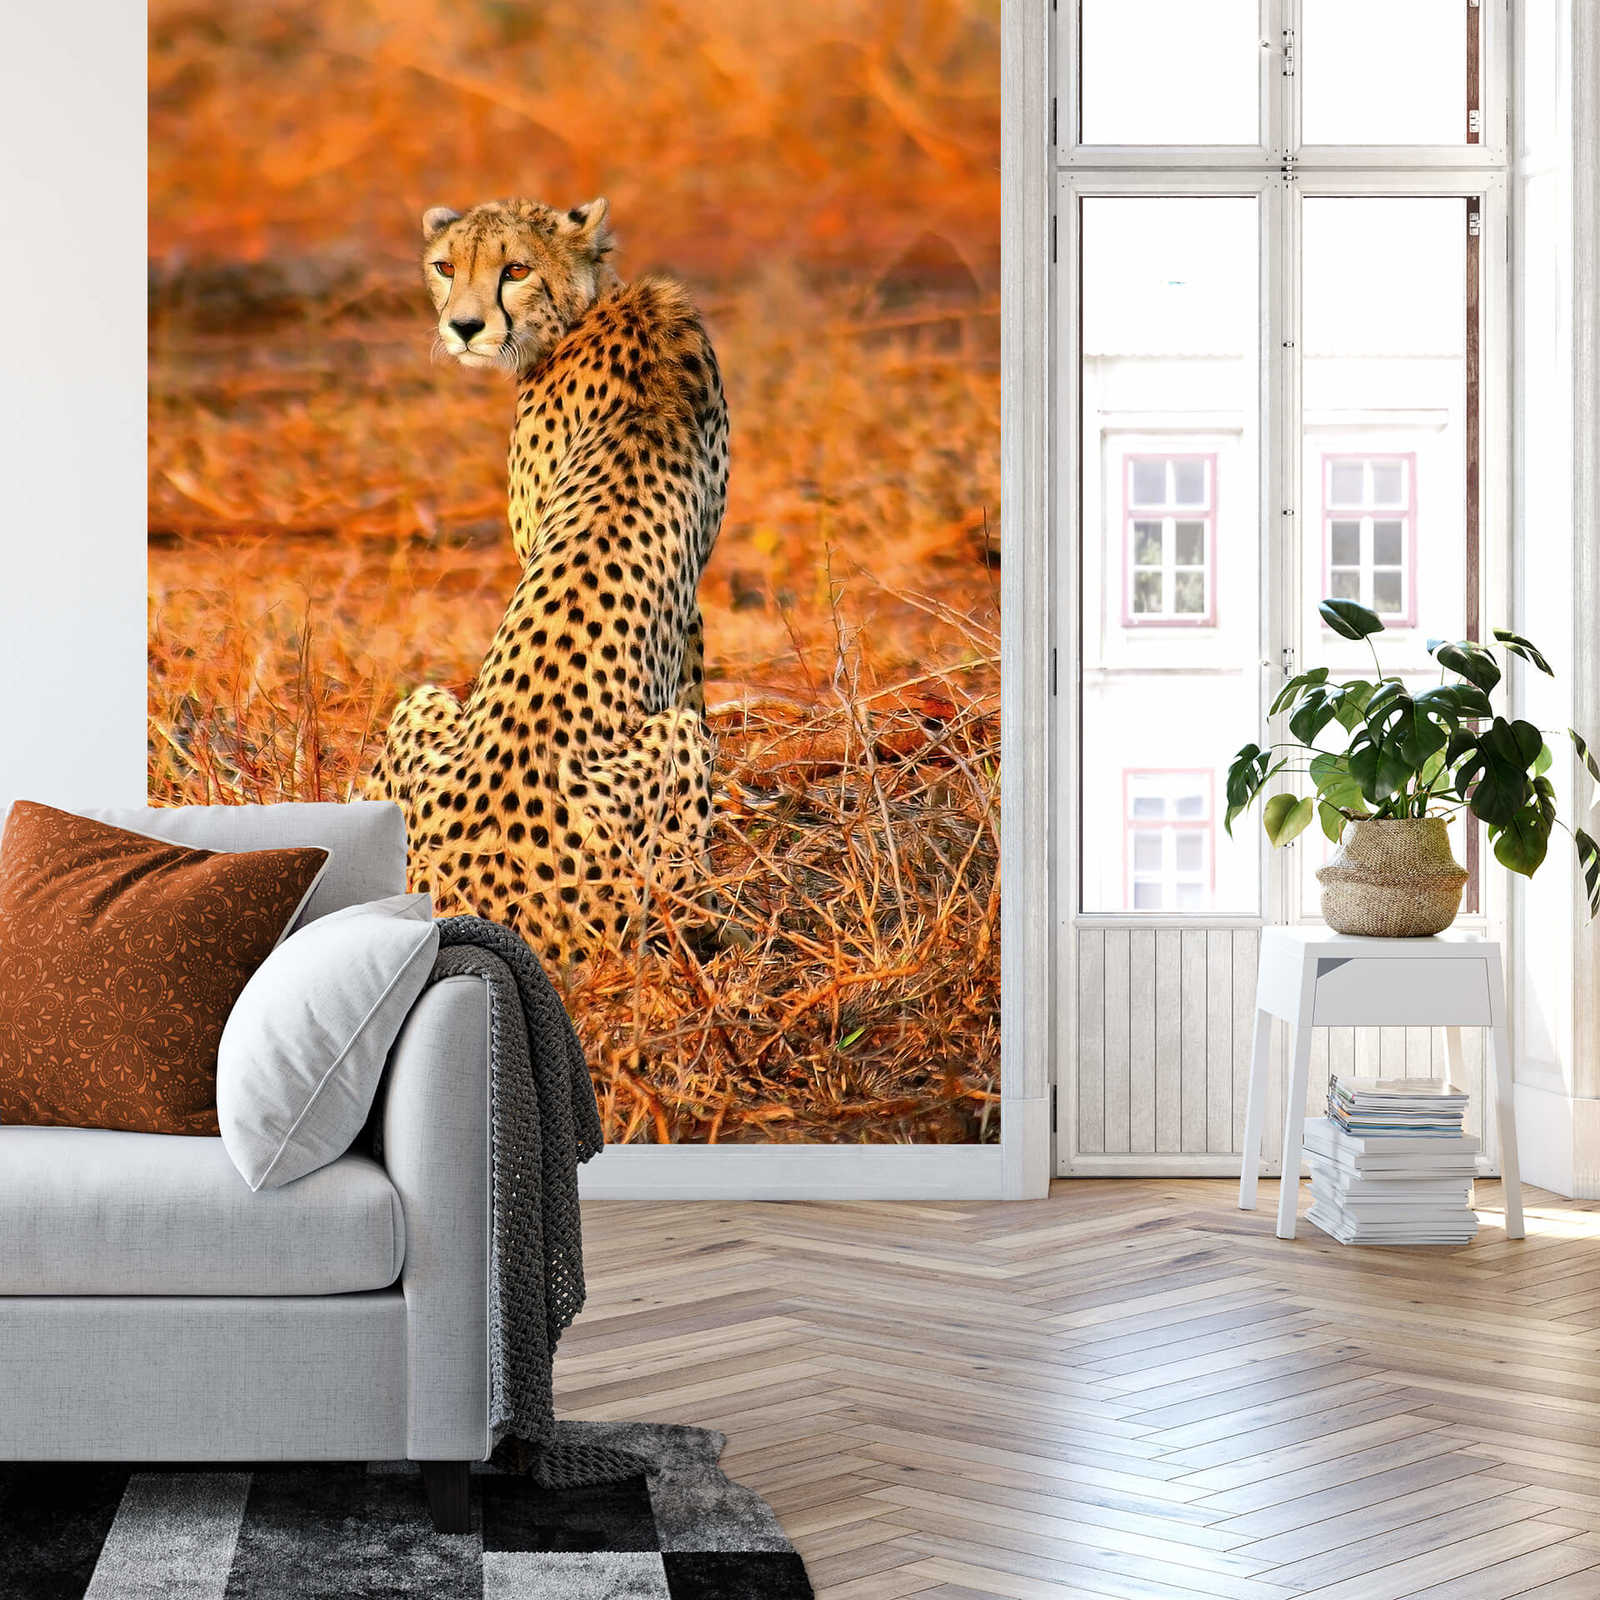             Safari mural animal leopard - yellow, orange, black
        